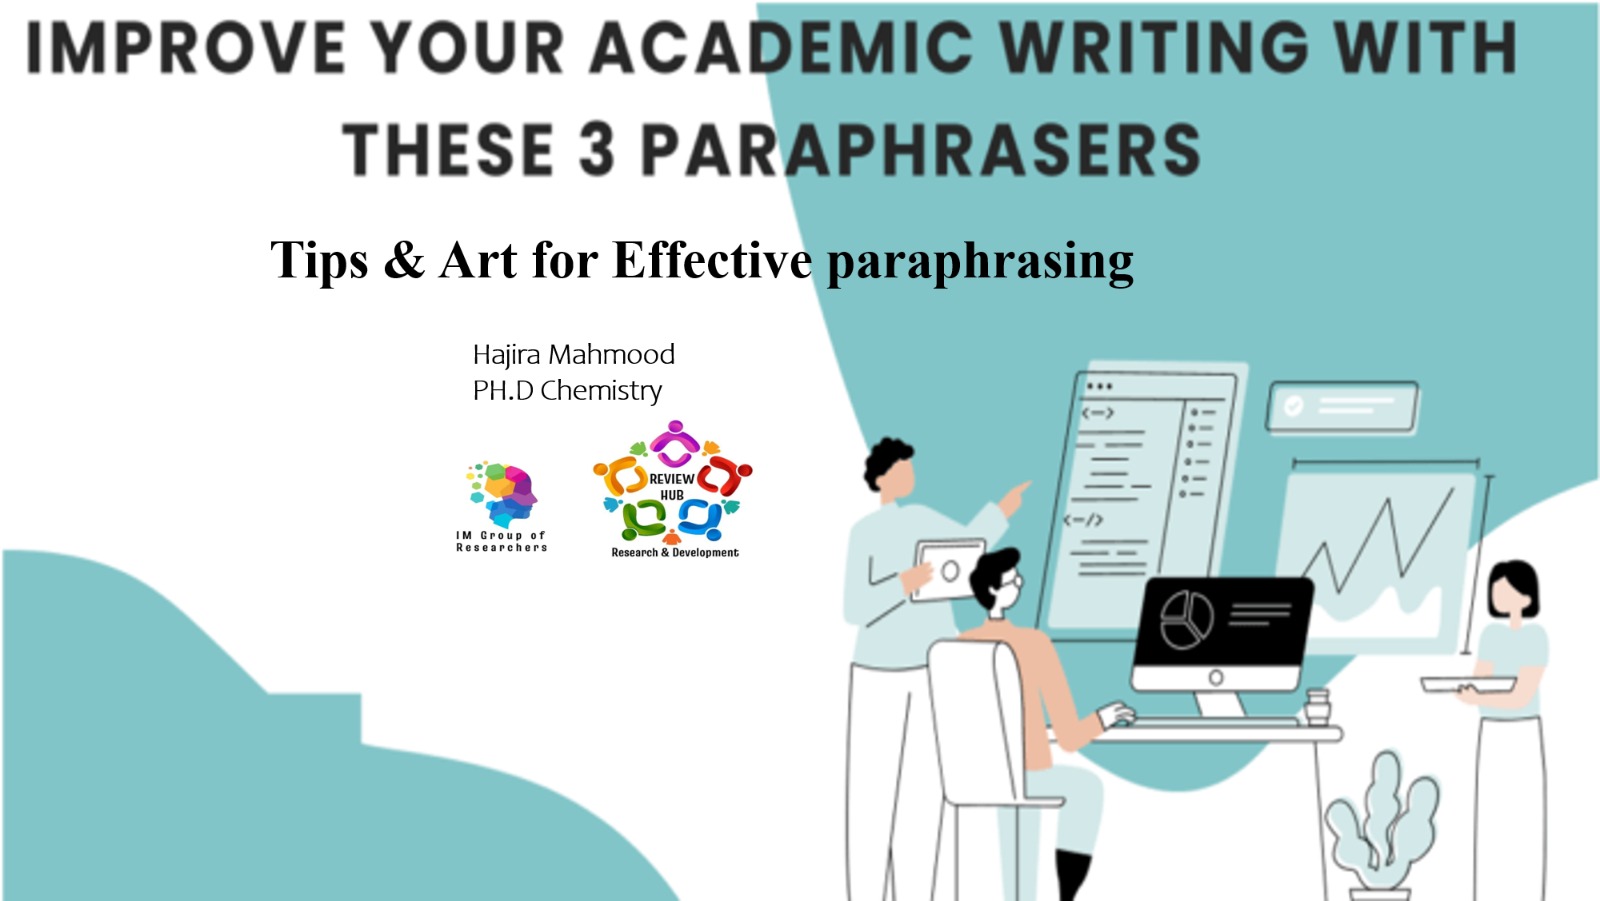 Tips & Art for Effective paraphrasing